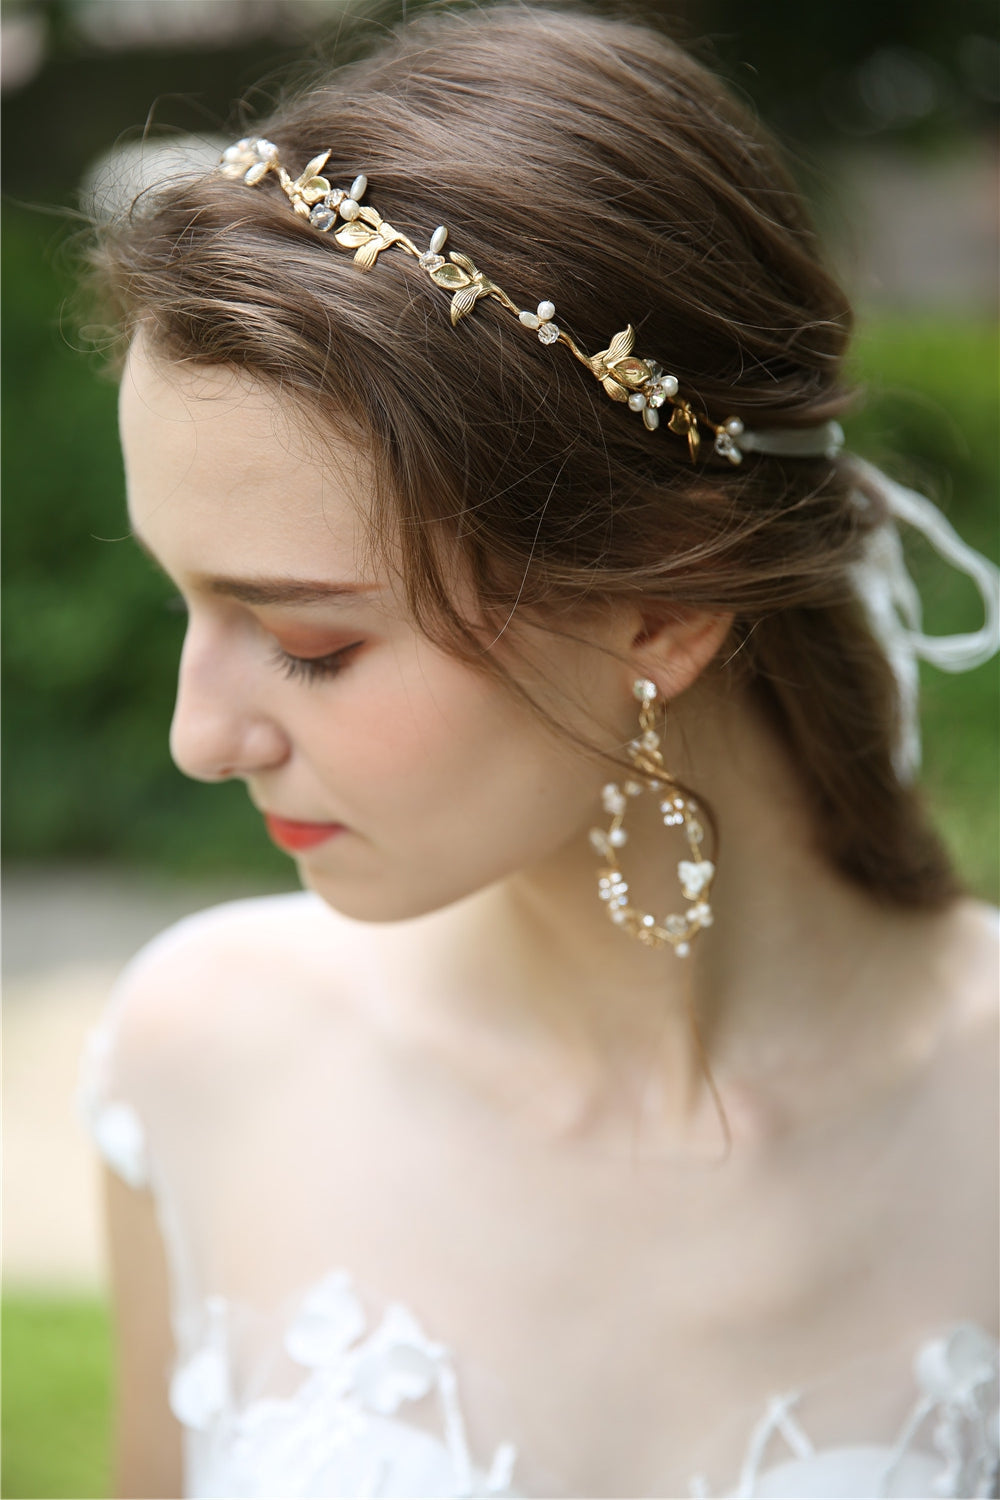 Handmade Bridal Hair Accessories - Bridal Fashion Headband